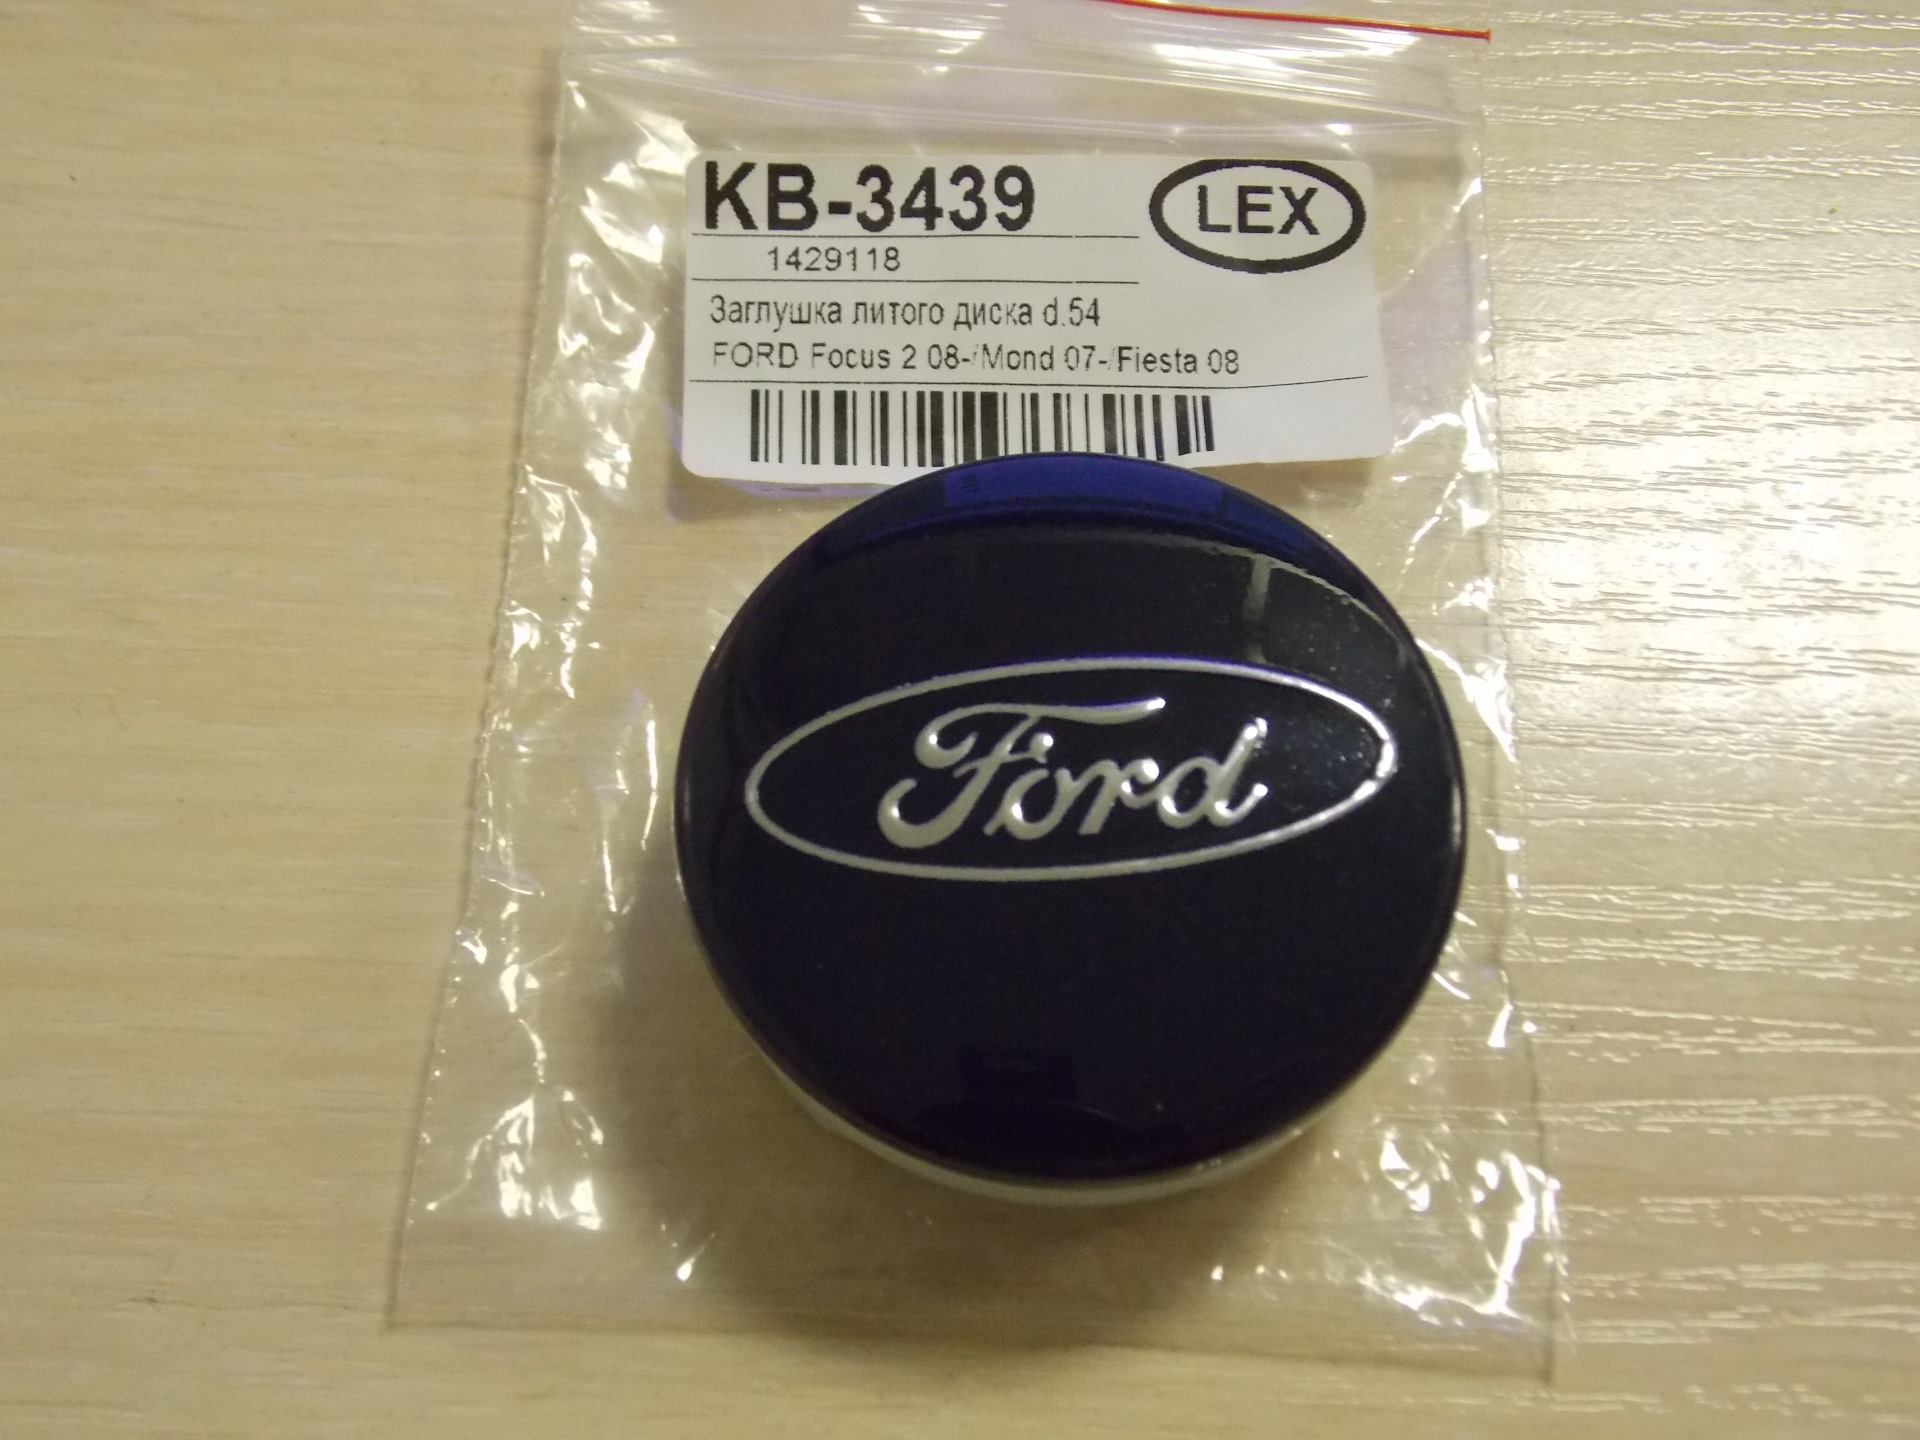 Kb5035849. Lex kb3439 заглушка литого диска. Заглушки оригинальные на диски Форд фокус 1. 1429118 Ford. 1429118 Колпачок литого диска Ford.